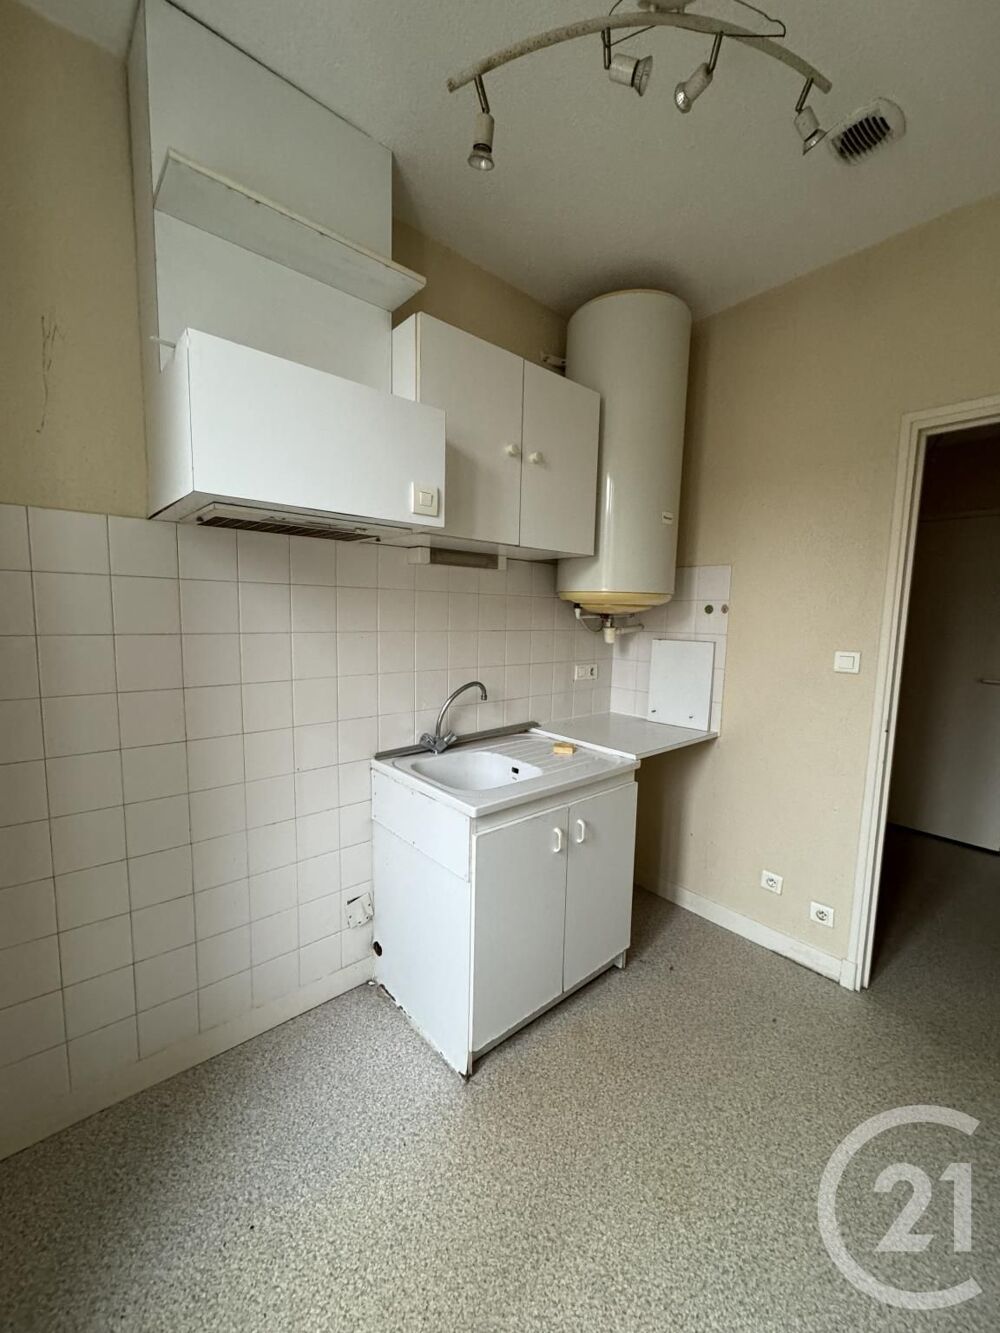 location Appartement - 2 pice(s) - 37 m Montluon (03100)